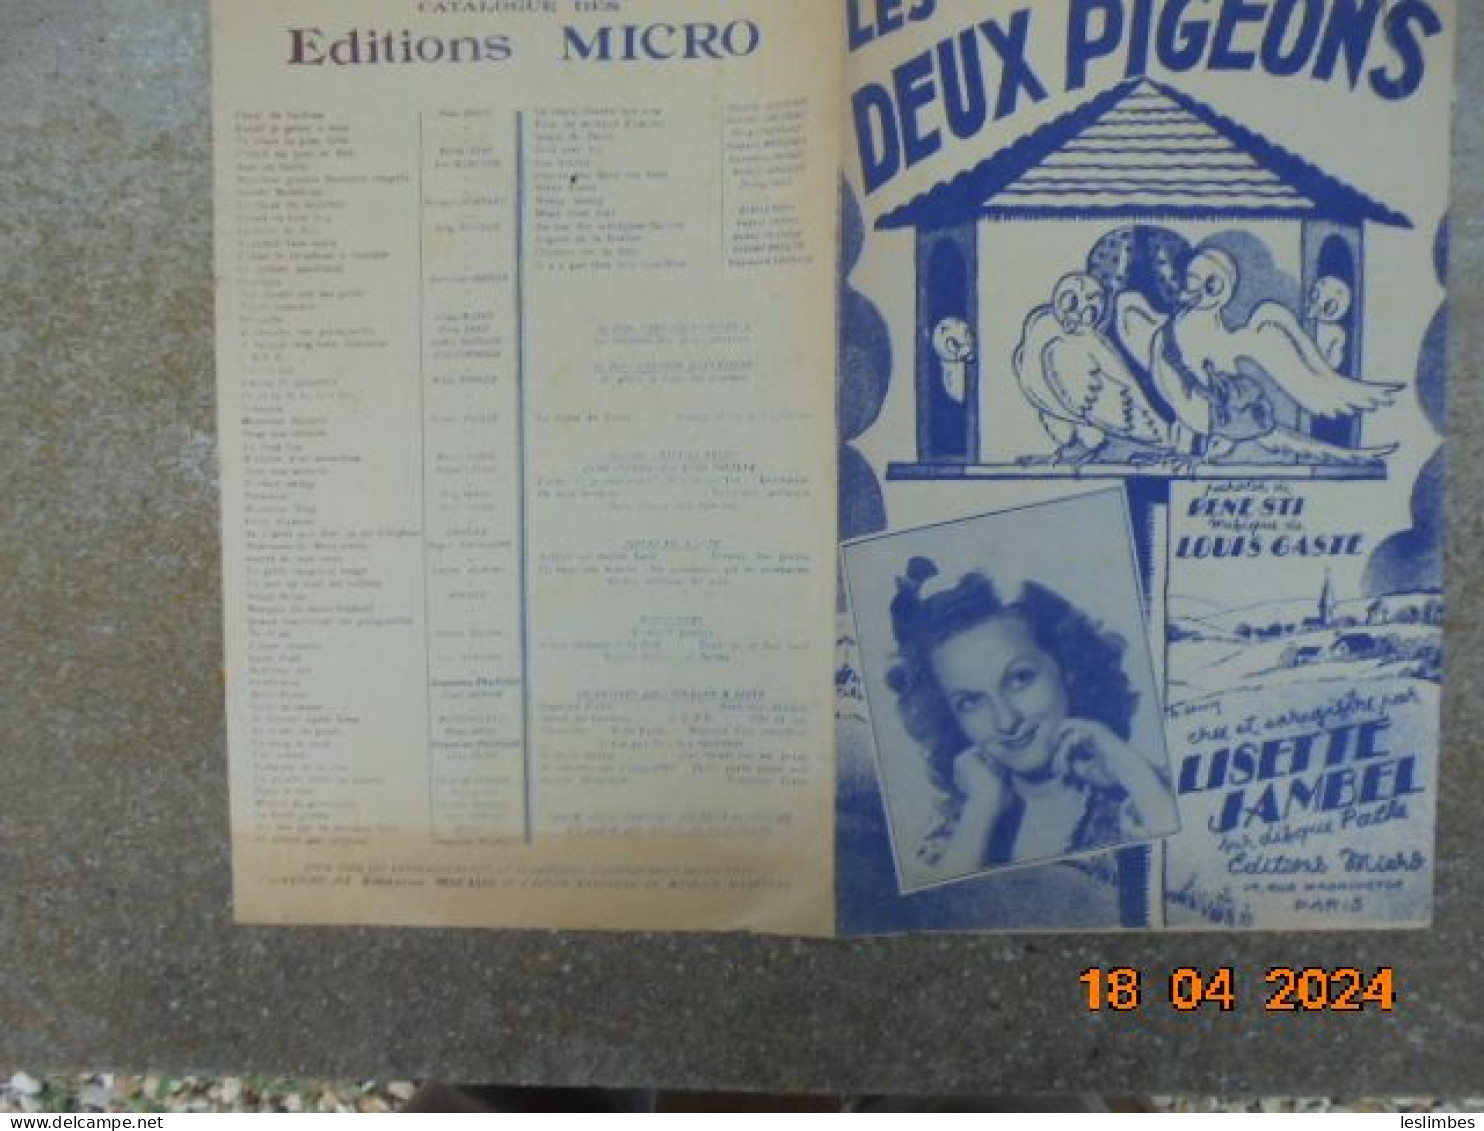 Les Deux Pigeons [partition] Fox-Trot - Rene Sti, Louis Gaste - Editions Micro 1948 - Partitions Musicales Anciennes